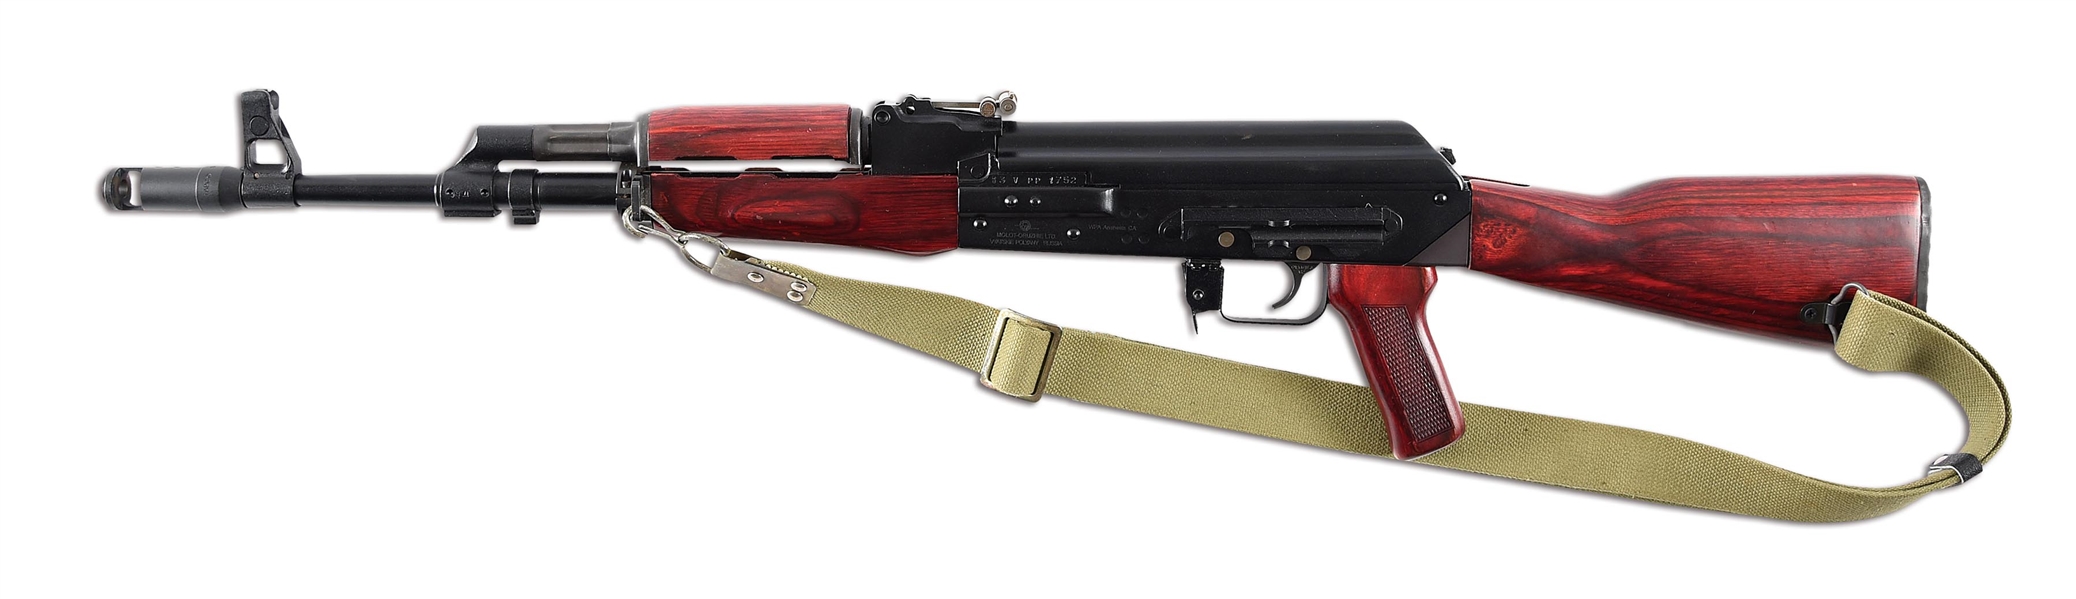 (M) MOLOT VEPR AK-47 SEMI-AUTOMATIC RIFLE.